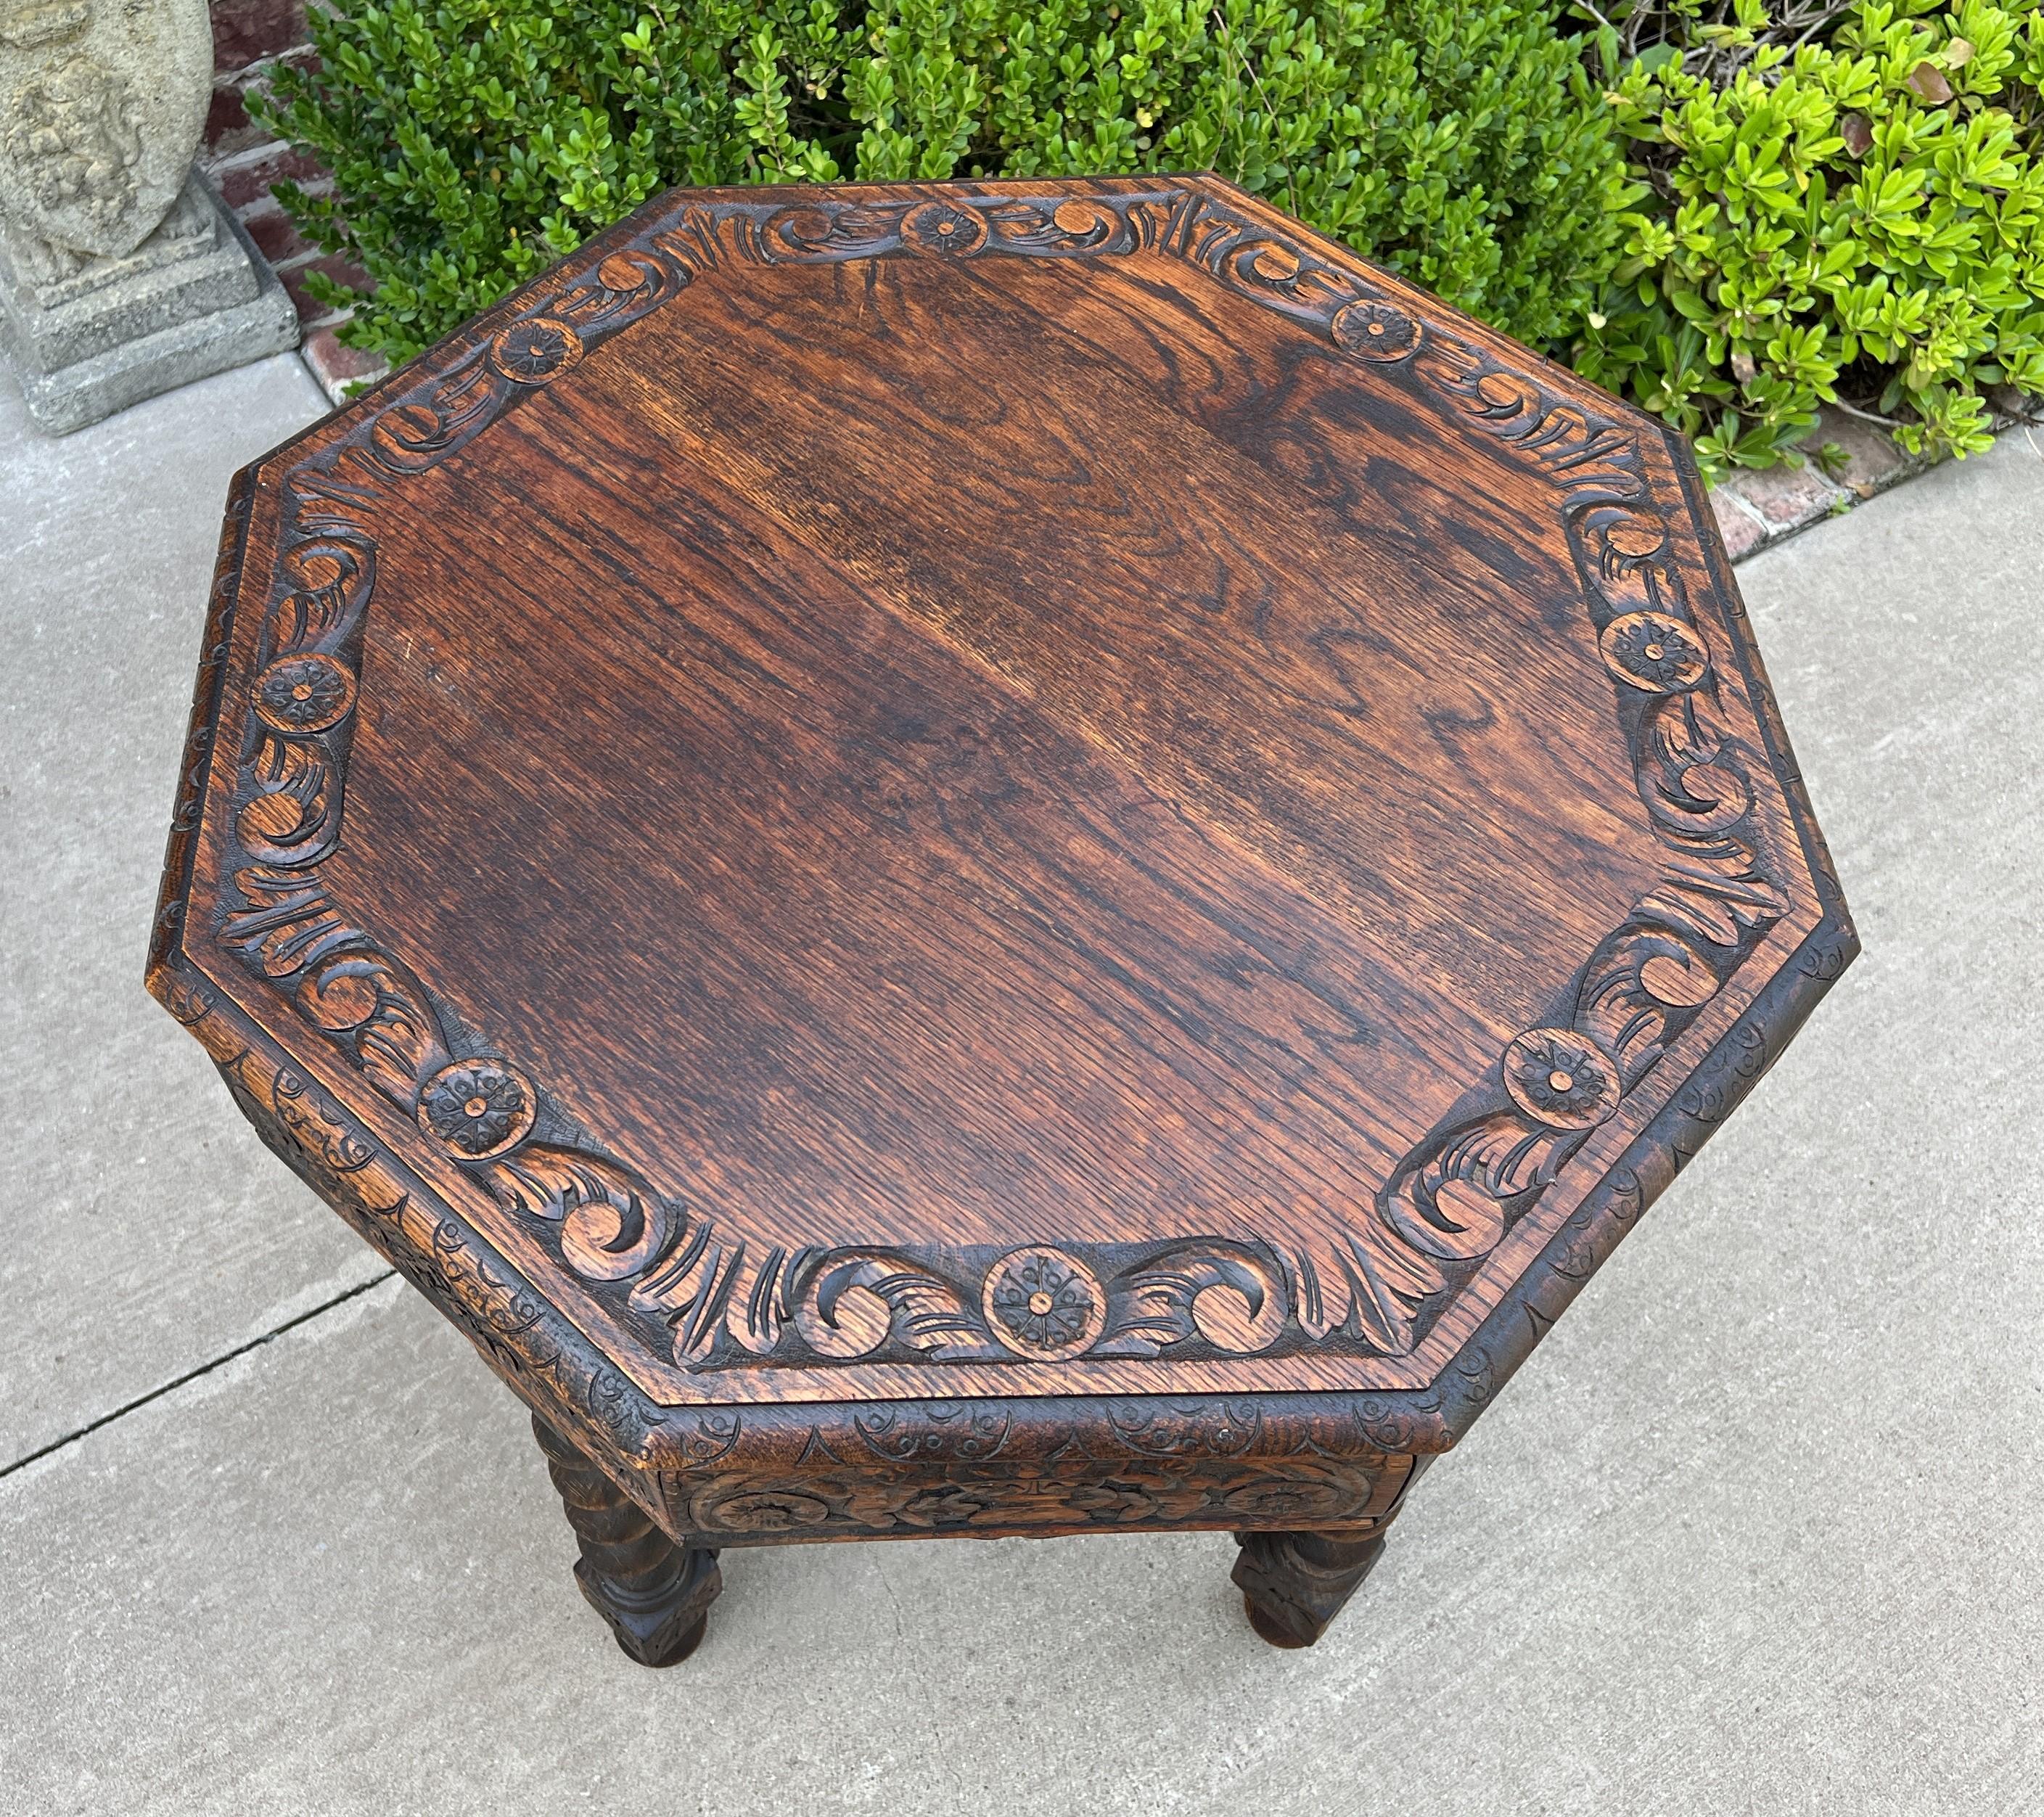 Antique French Table Barley Twist Octagonal Renaissance Revival Carved Oak 19thc For Sale 2